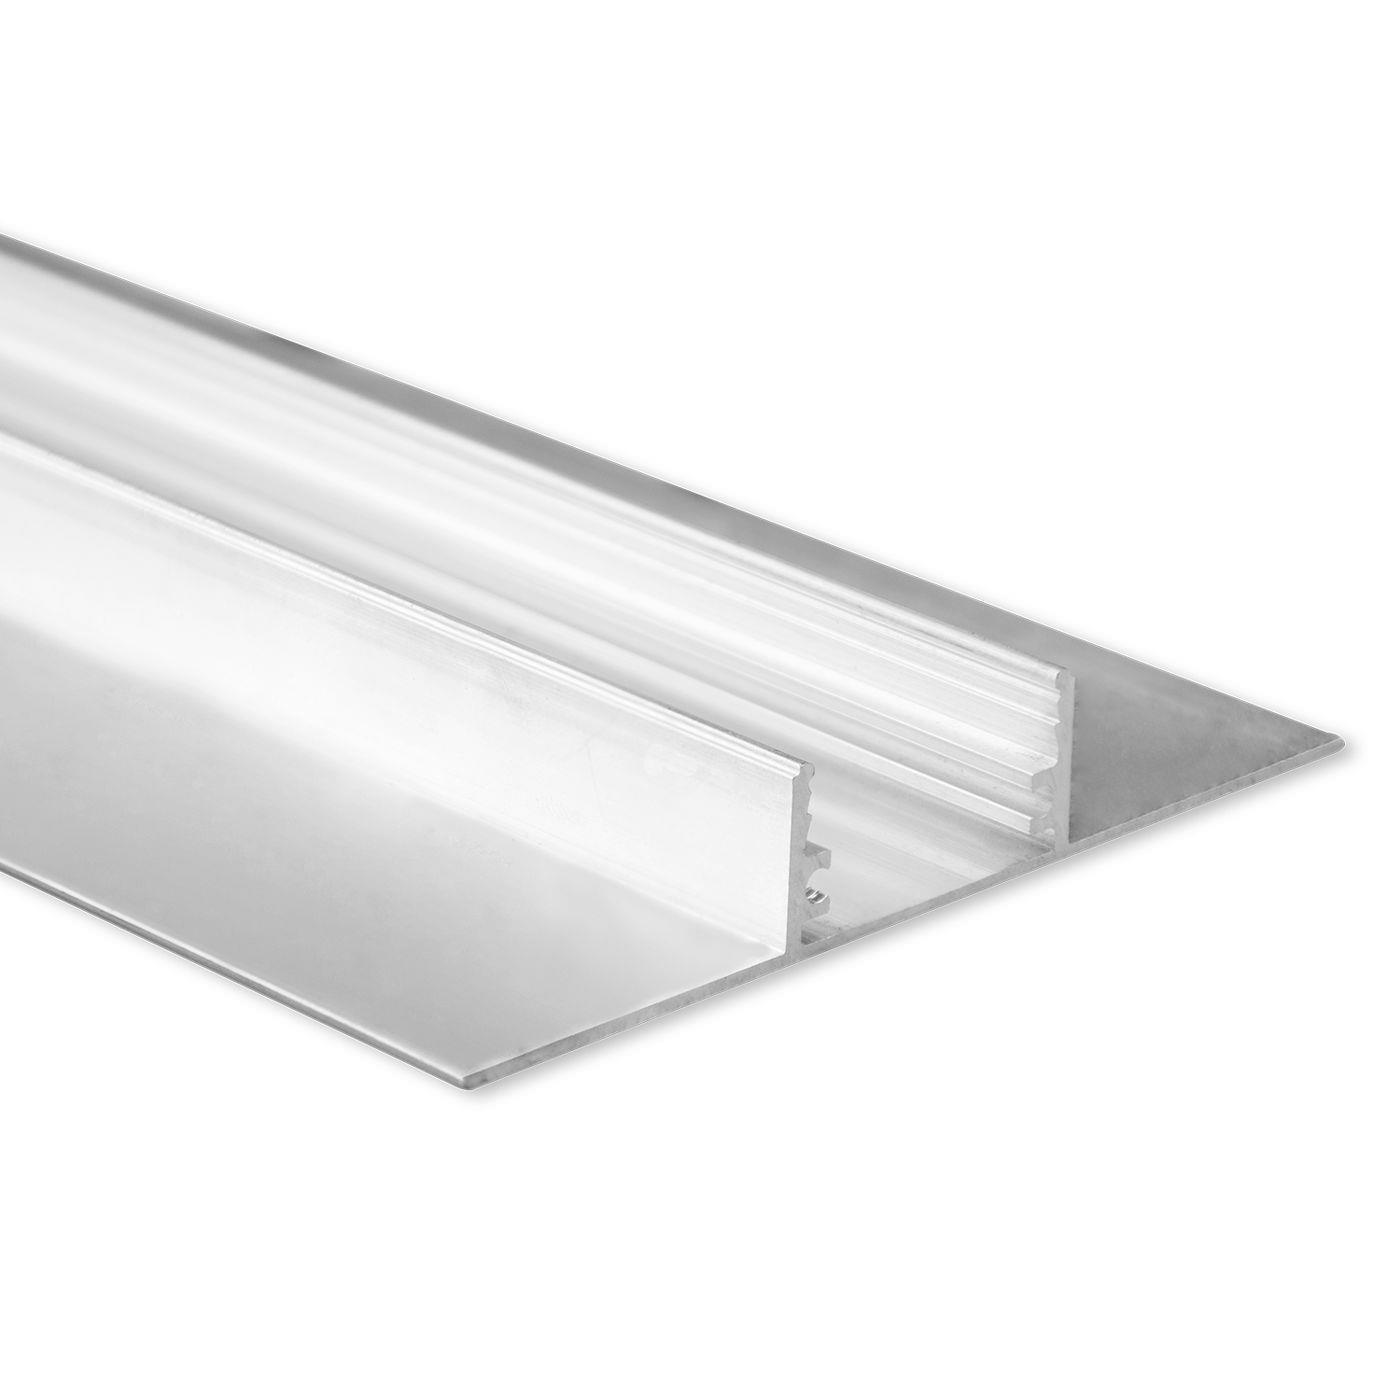 2m LED profile TBP5 Silver 87,3x14,4mm Aluminium Drywall profile for 20mm LED strips